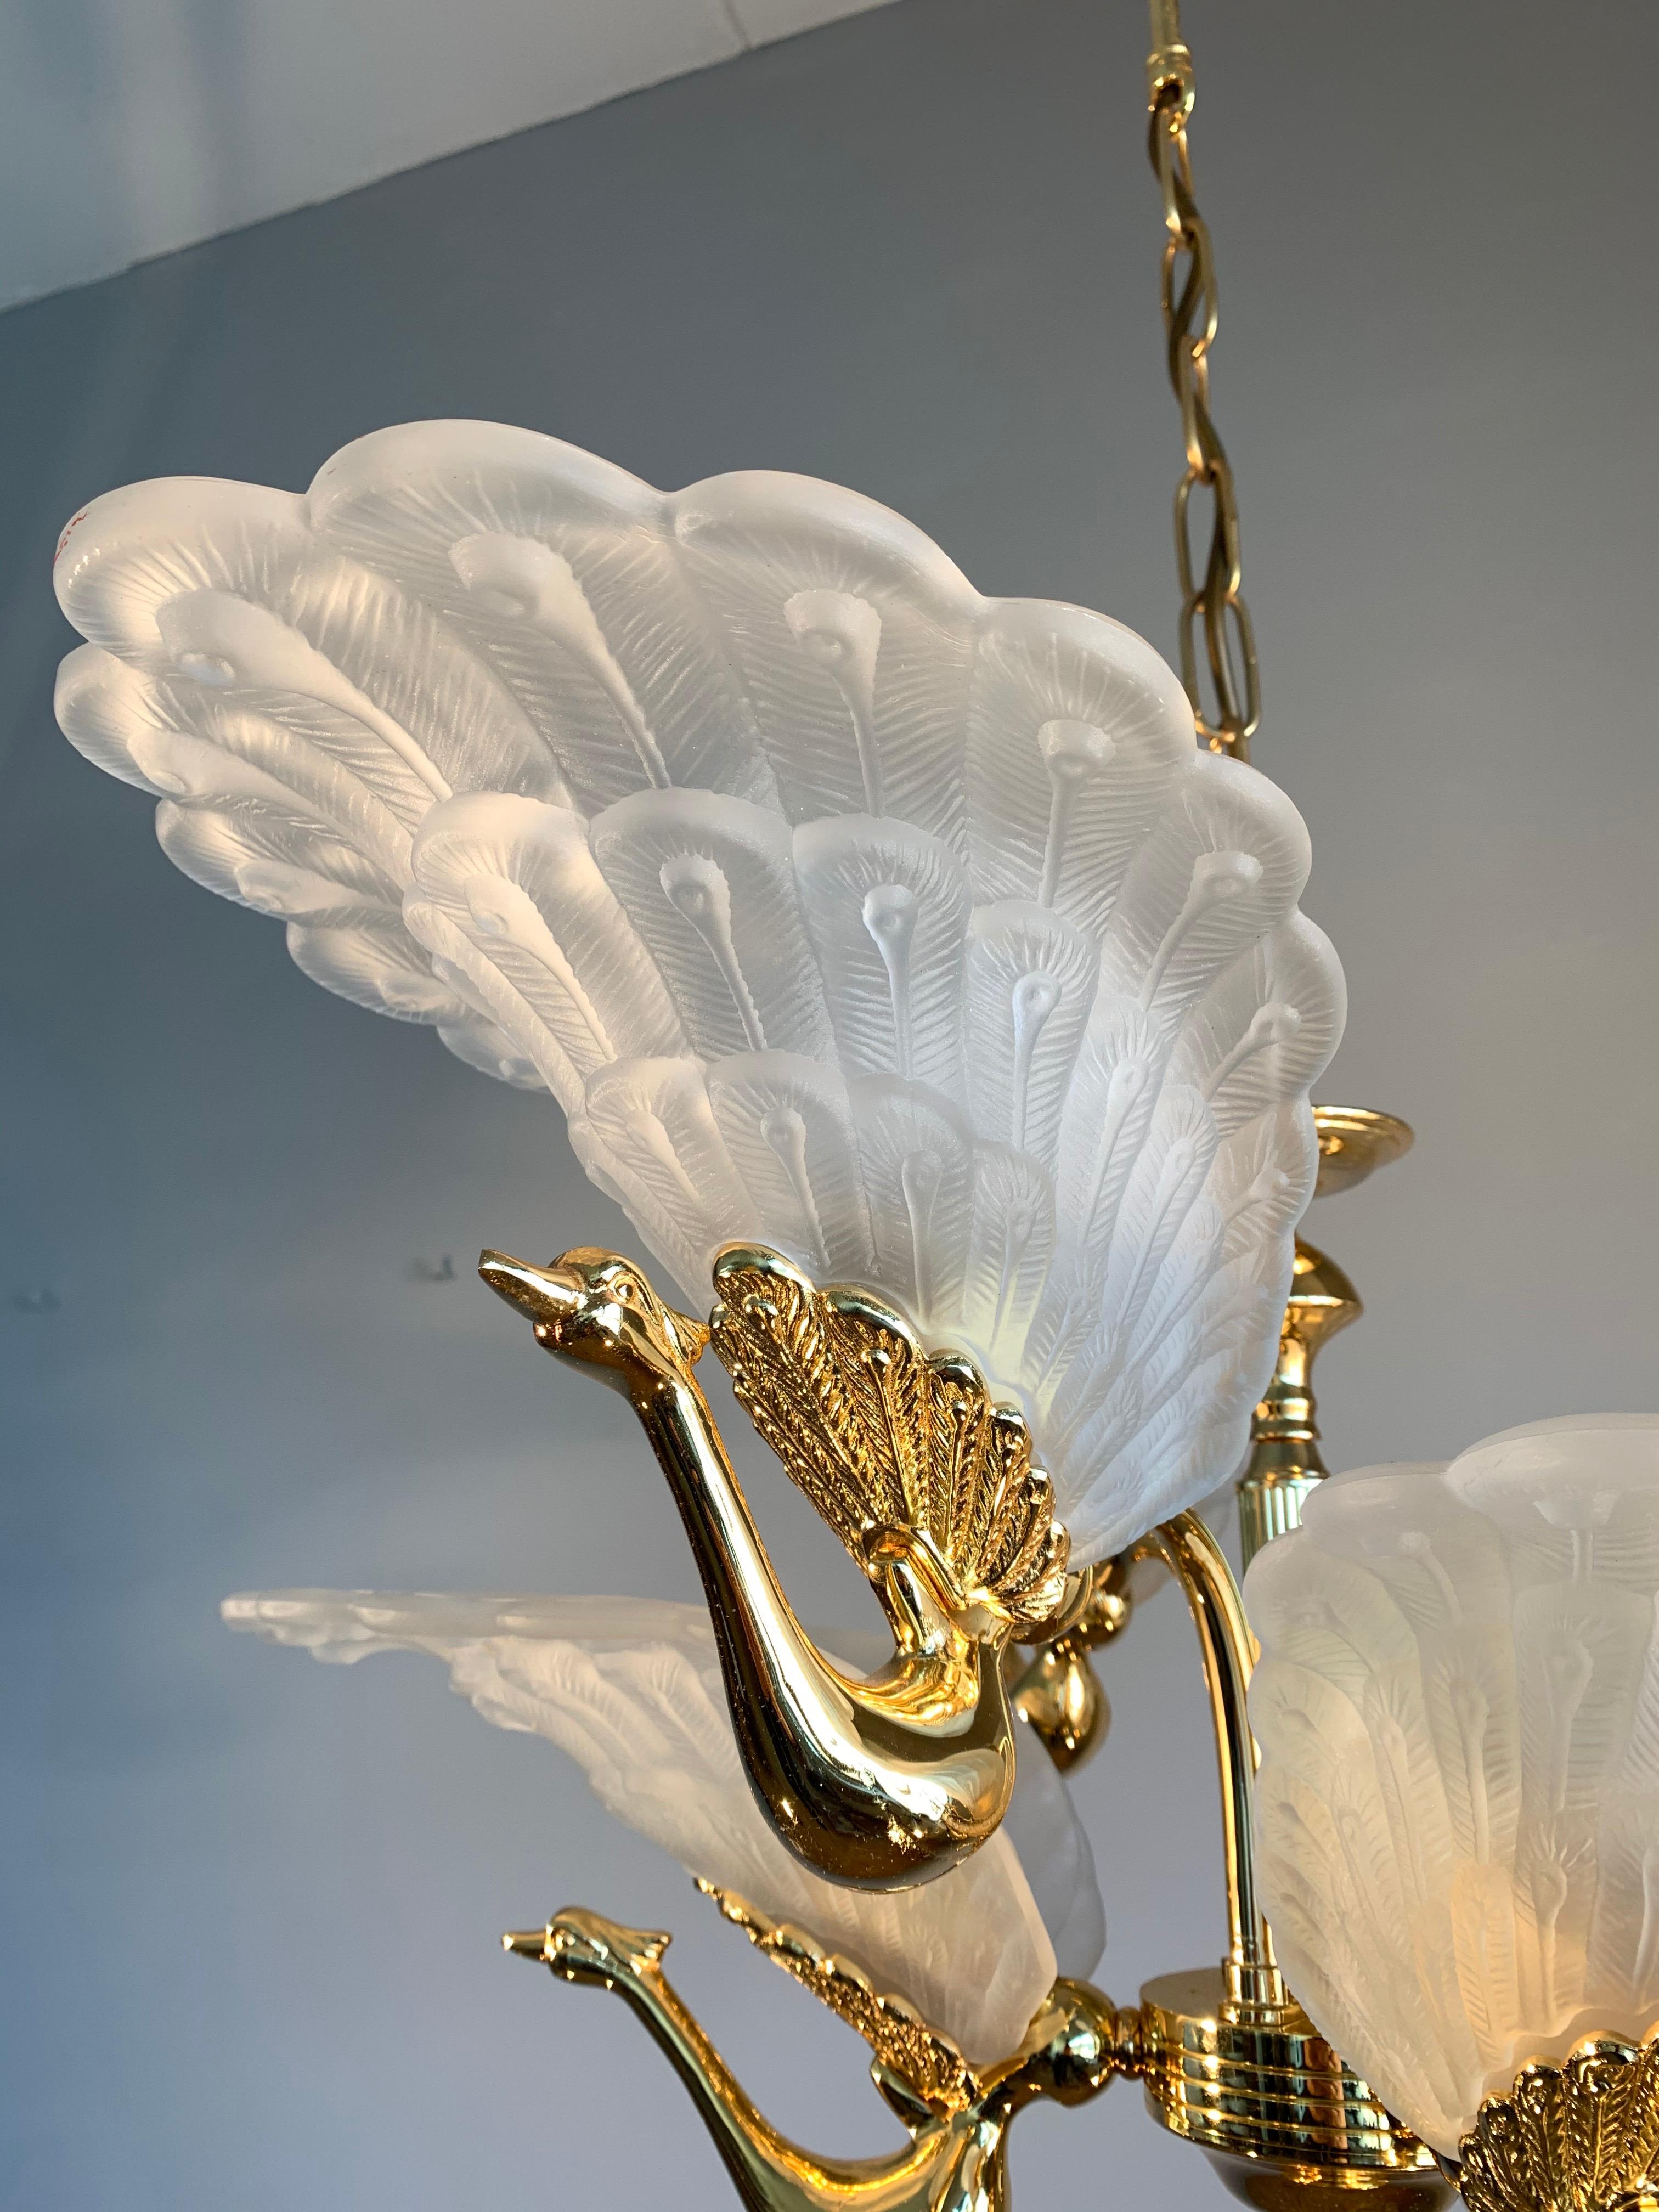 peacock chandelier ceiling lamp